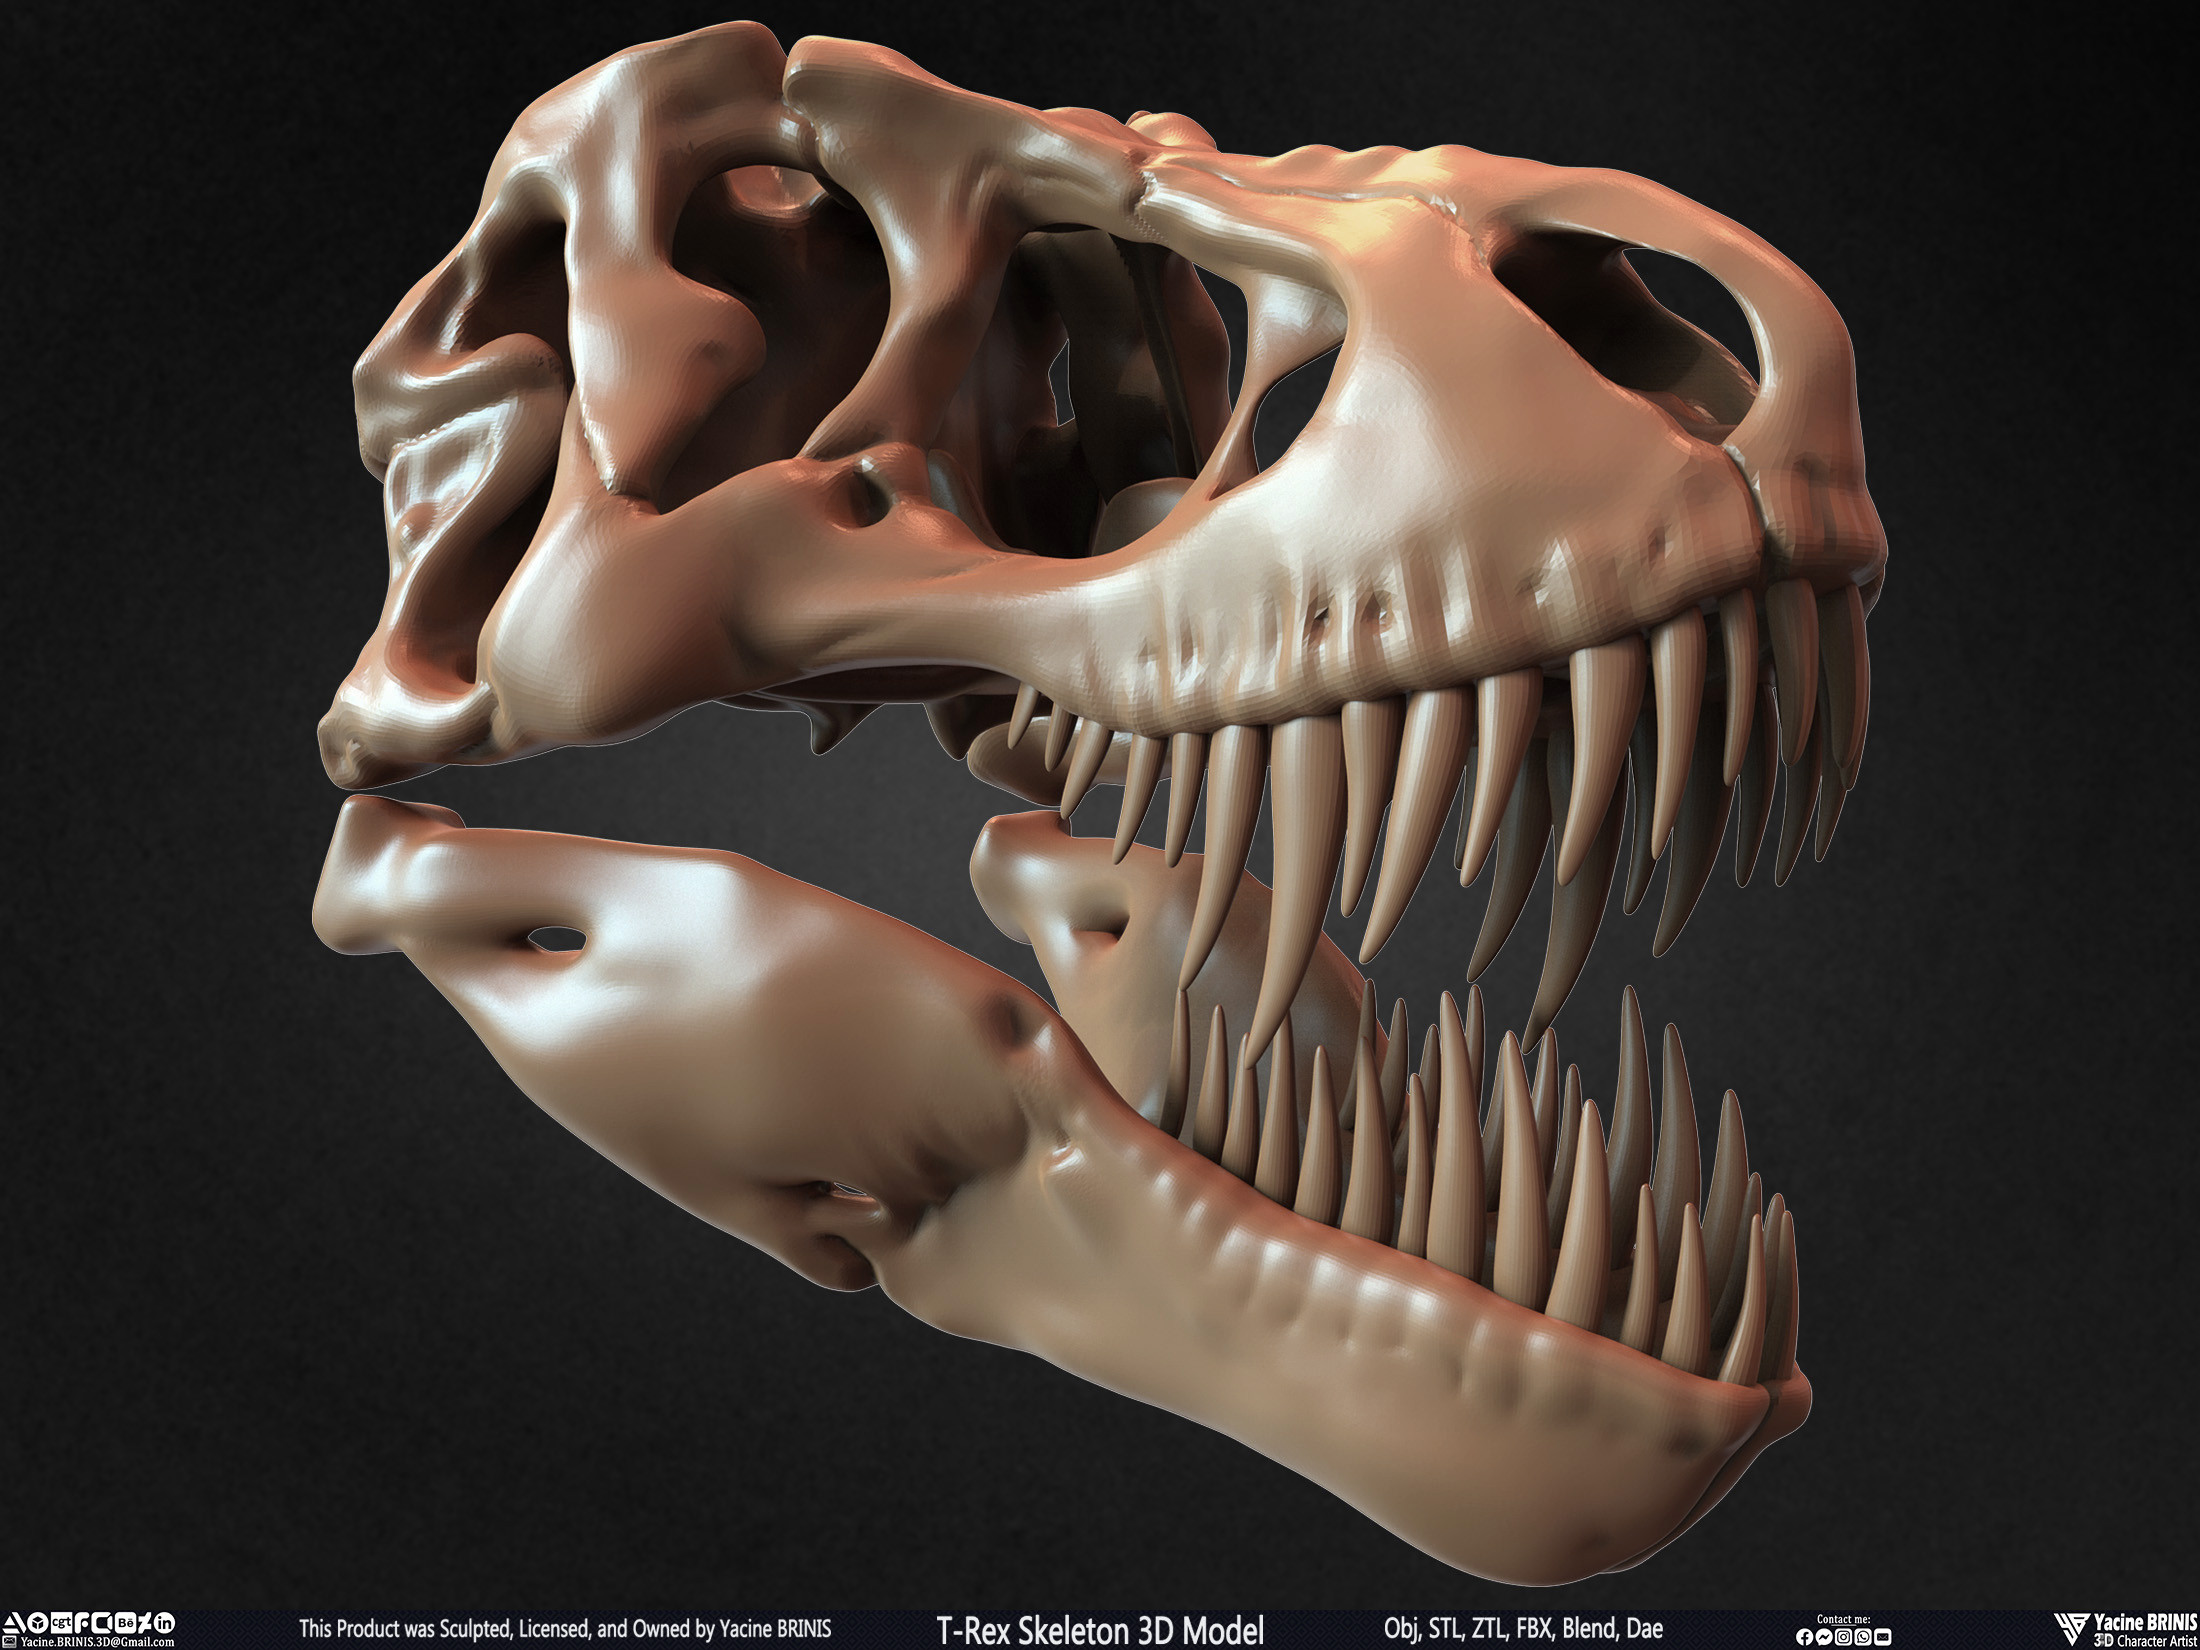 T-Rex Skeleton 3D Model (Tyrannosaurus Rex) Sculpted By Yacine BRINIS Set 017